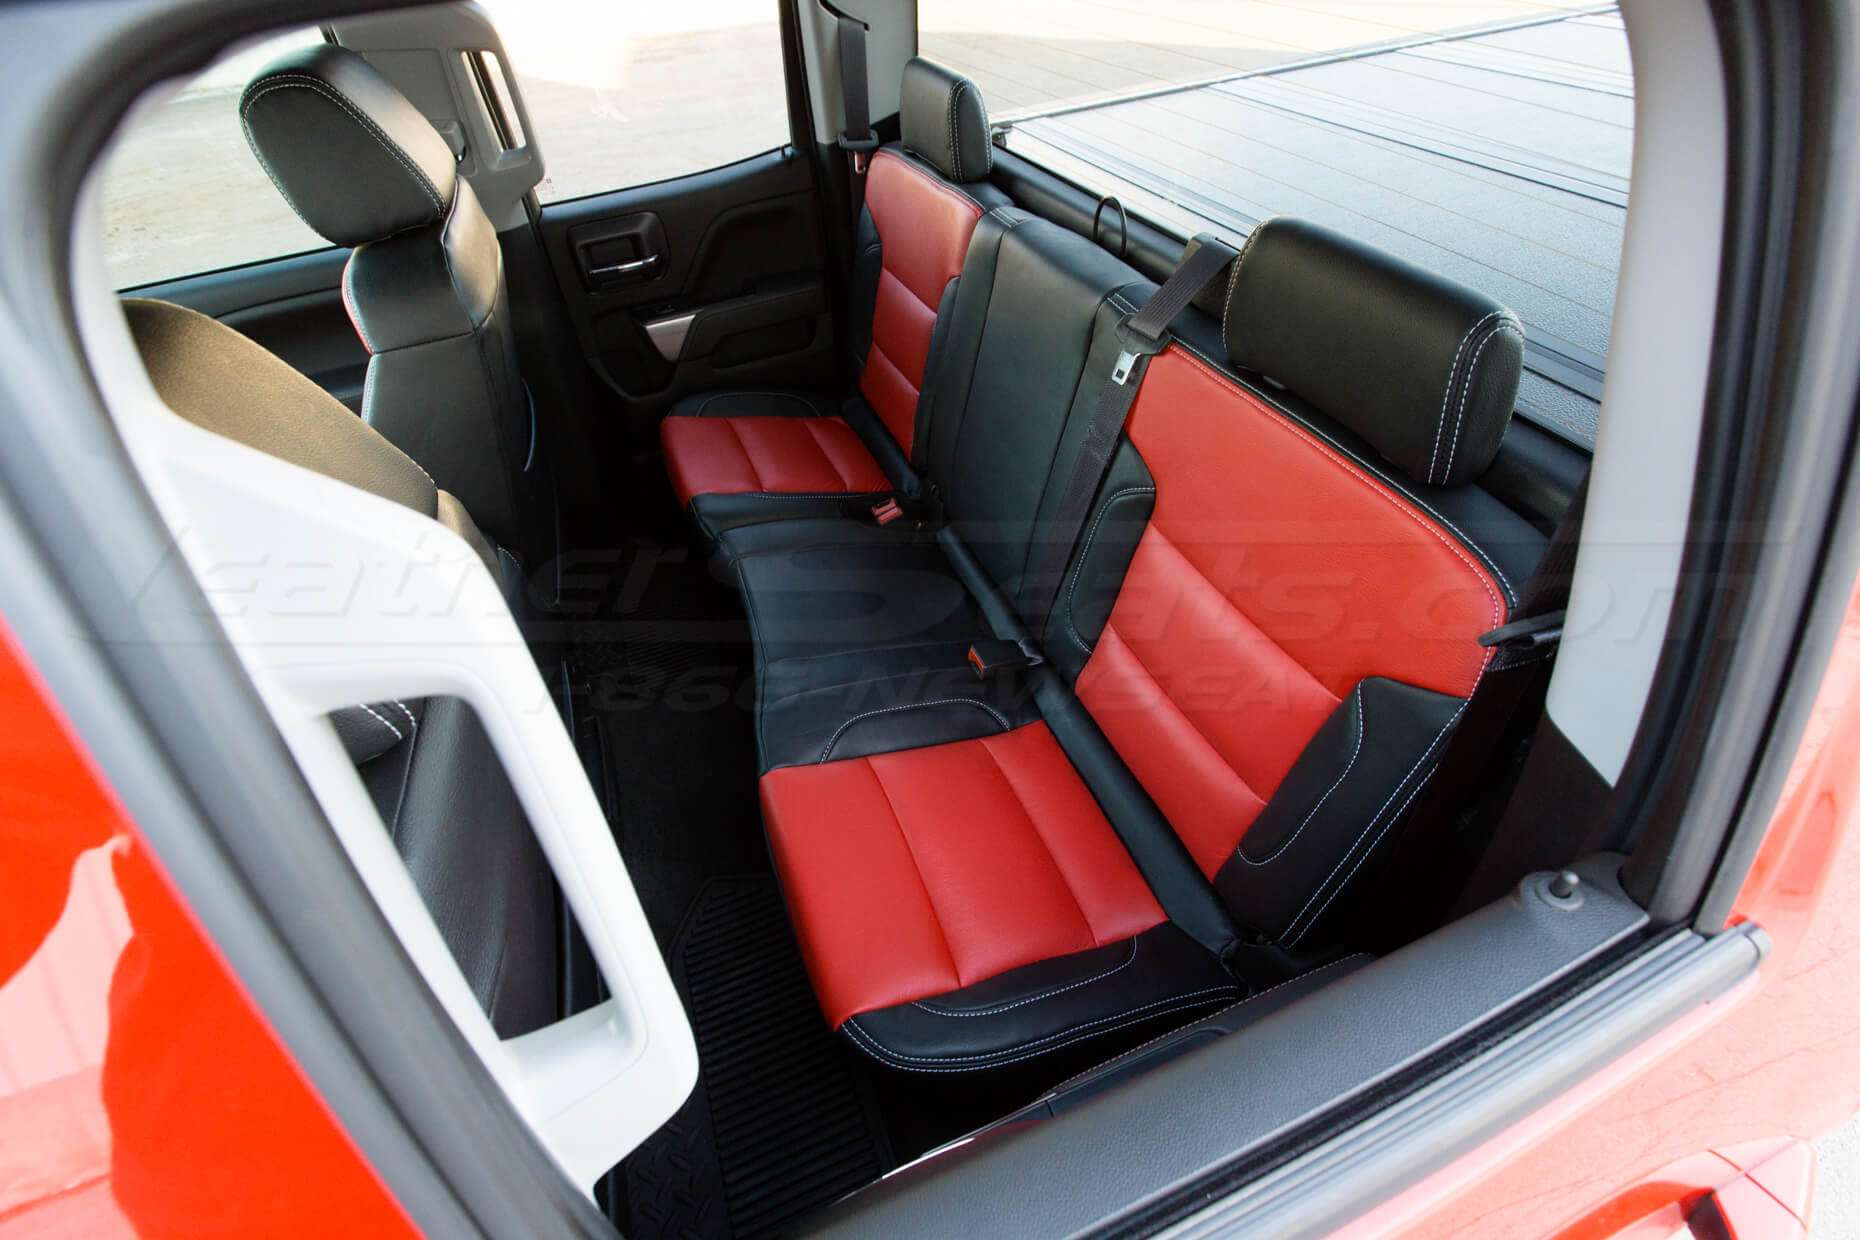 Chevrolet Silverado Black & Bright Red installed - Overhead rear seats